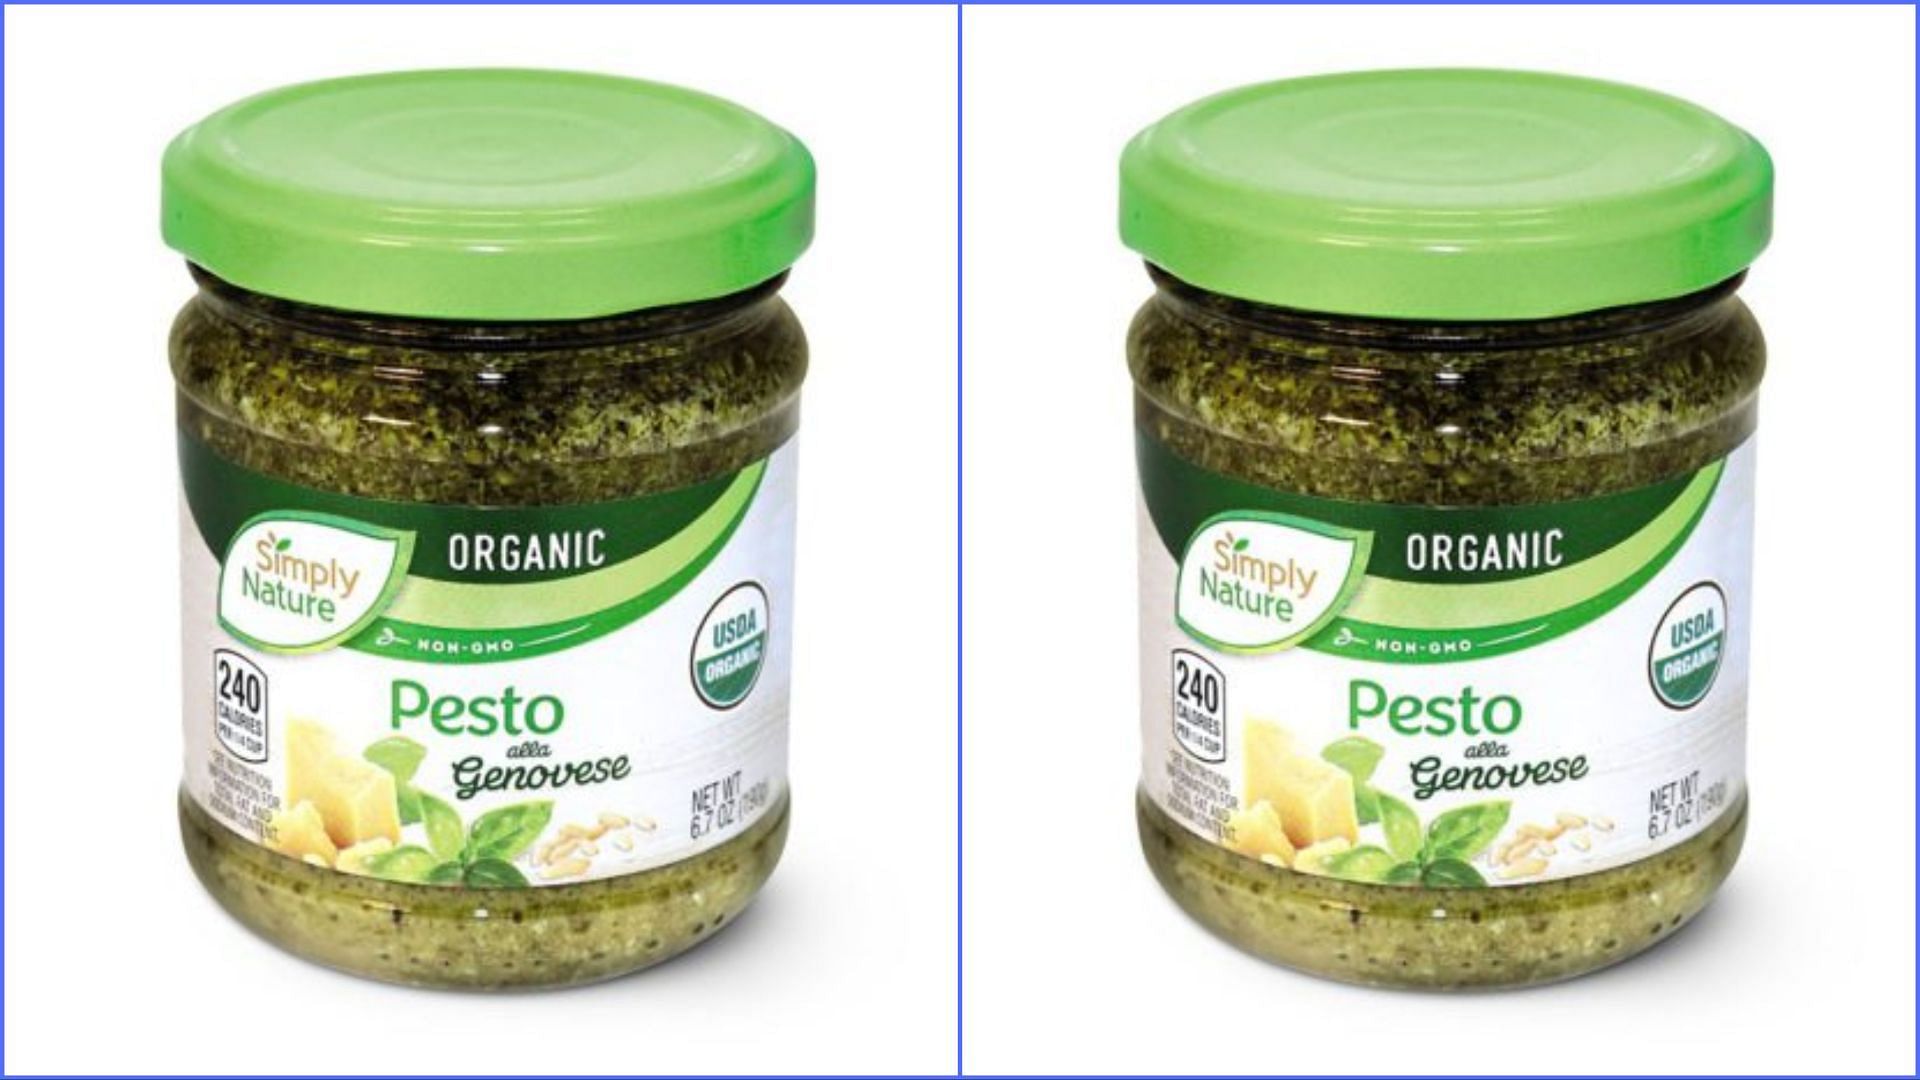 Simply Nature Organic Pesto (Image via Aldi&rsquo;s)